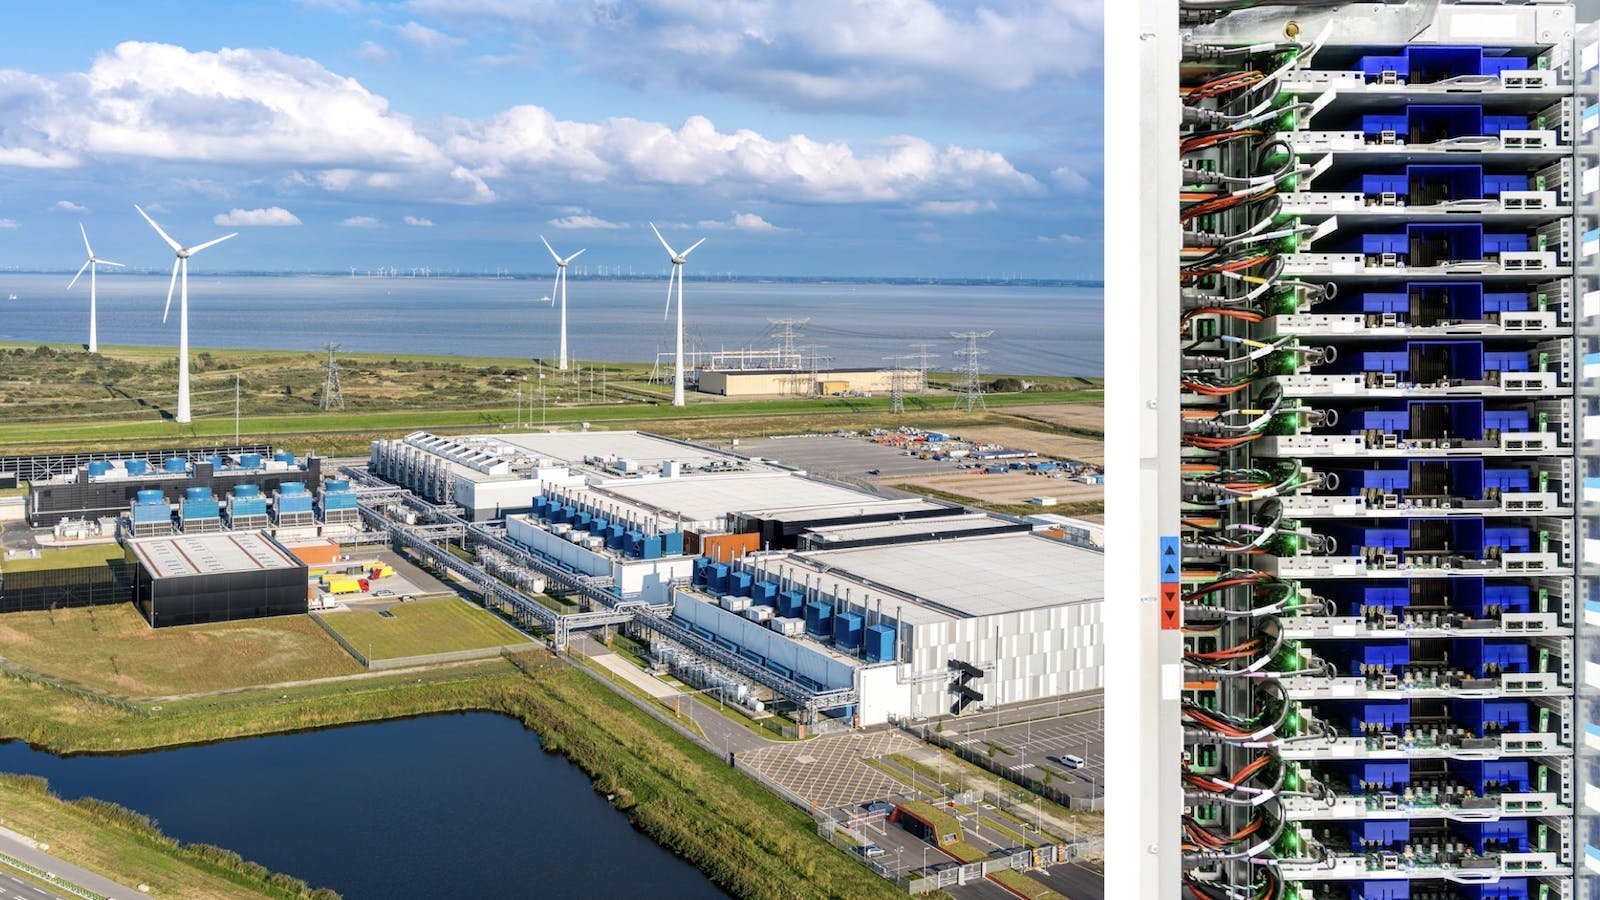 Figure 1: Google’s data center in Eemshaven, Netherlands (Source: Google)